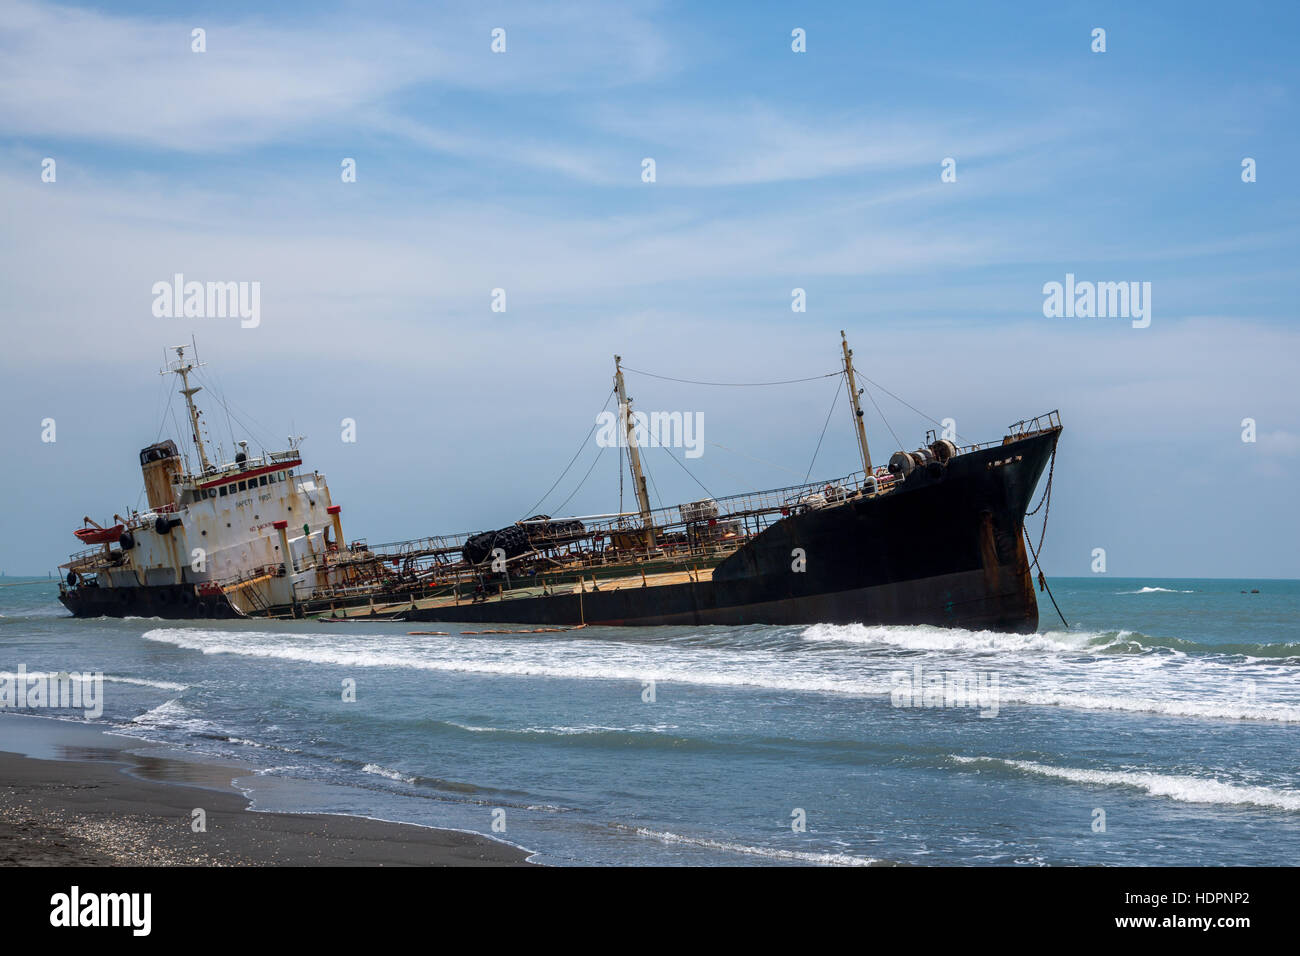 Sunken boat at beach Stock Photo